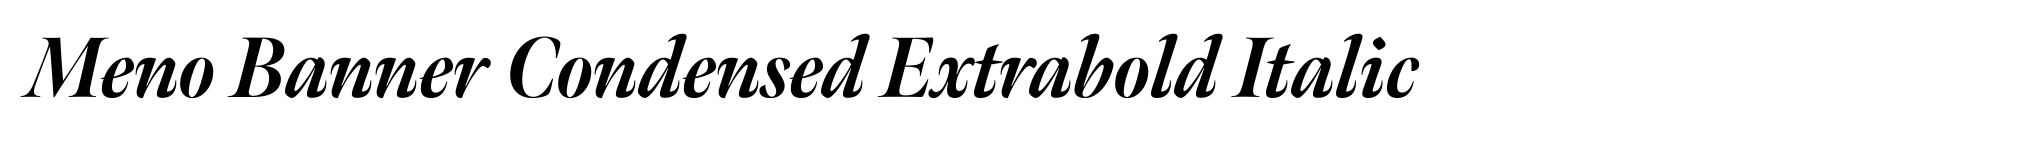 Meno Banner Condensed Extrabold Italic image